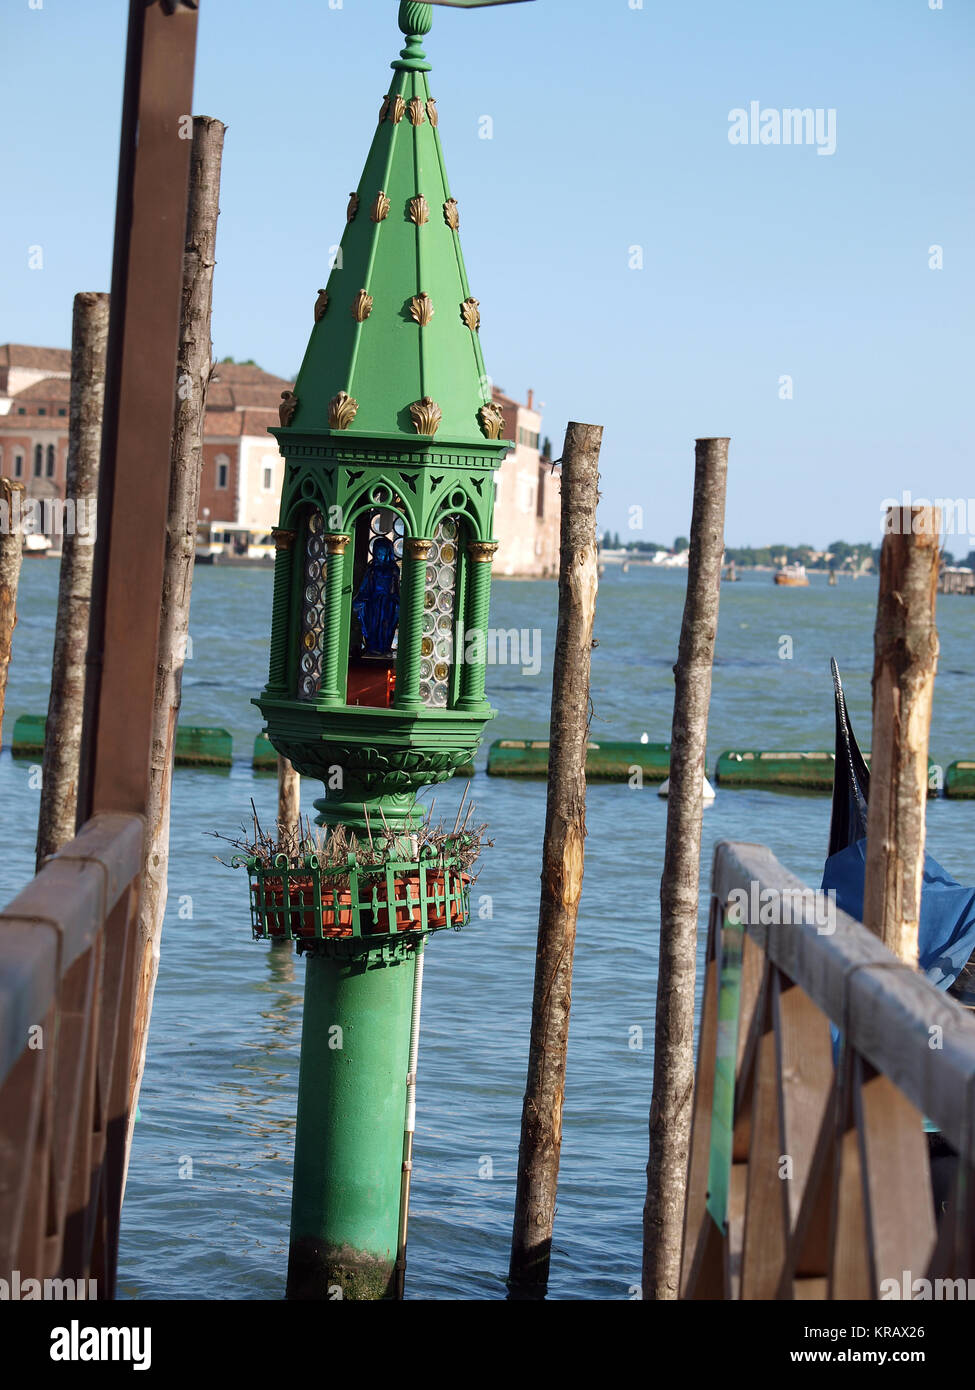 Venice - lanterns at St. Mark's Square Stock Photo